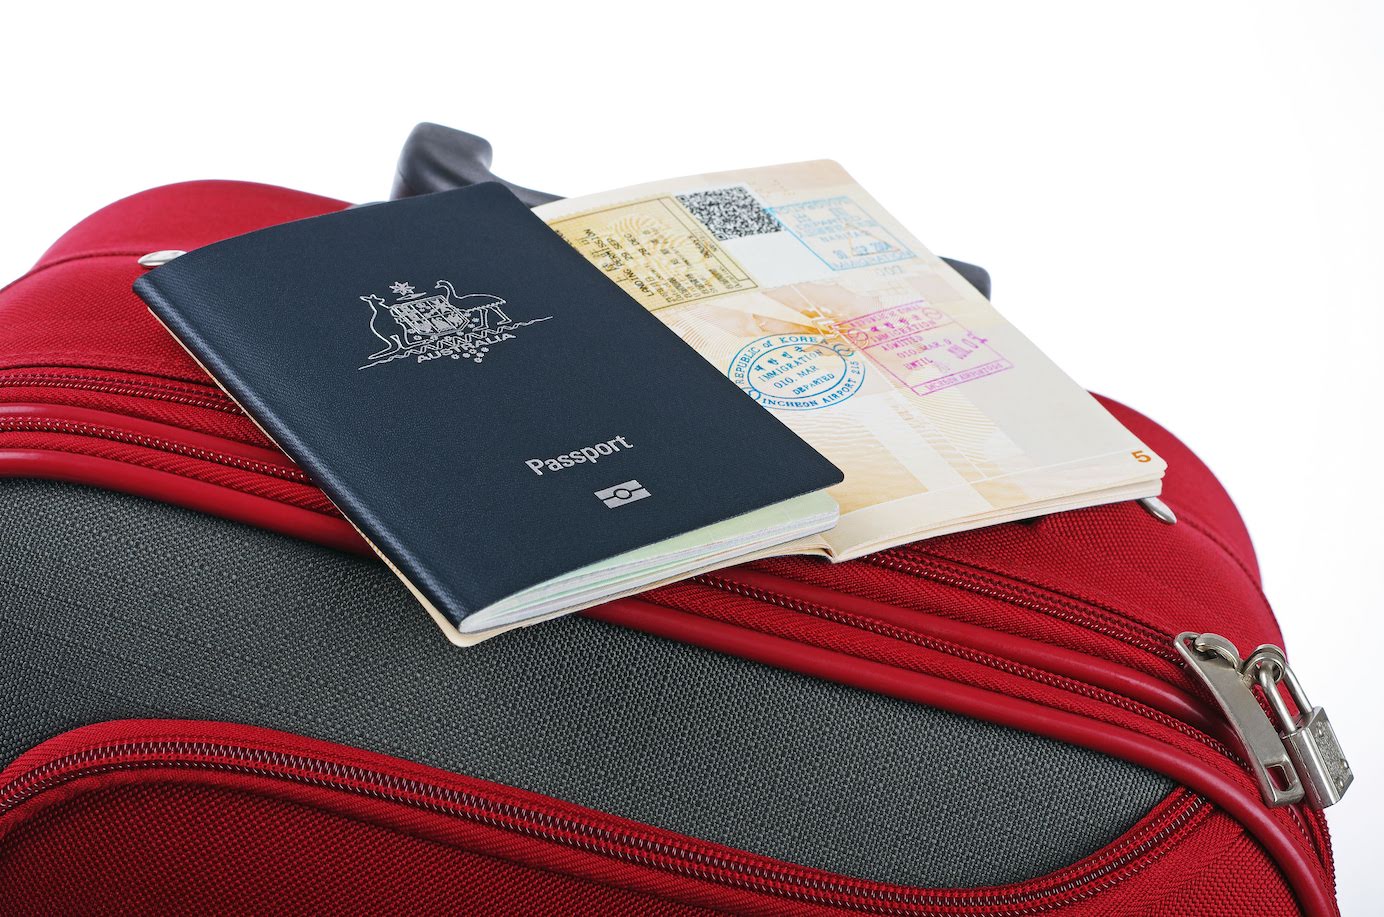 Vietnam e-Visa for Australians